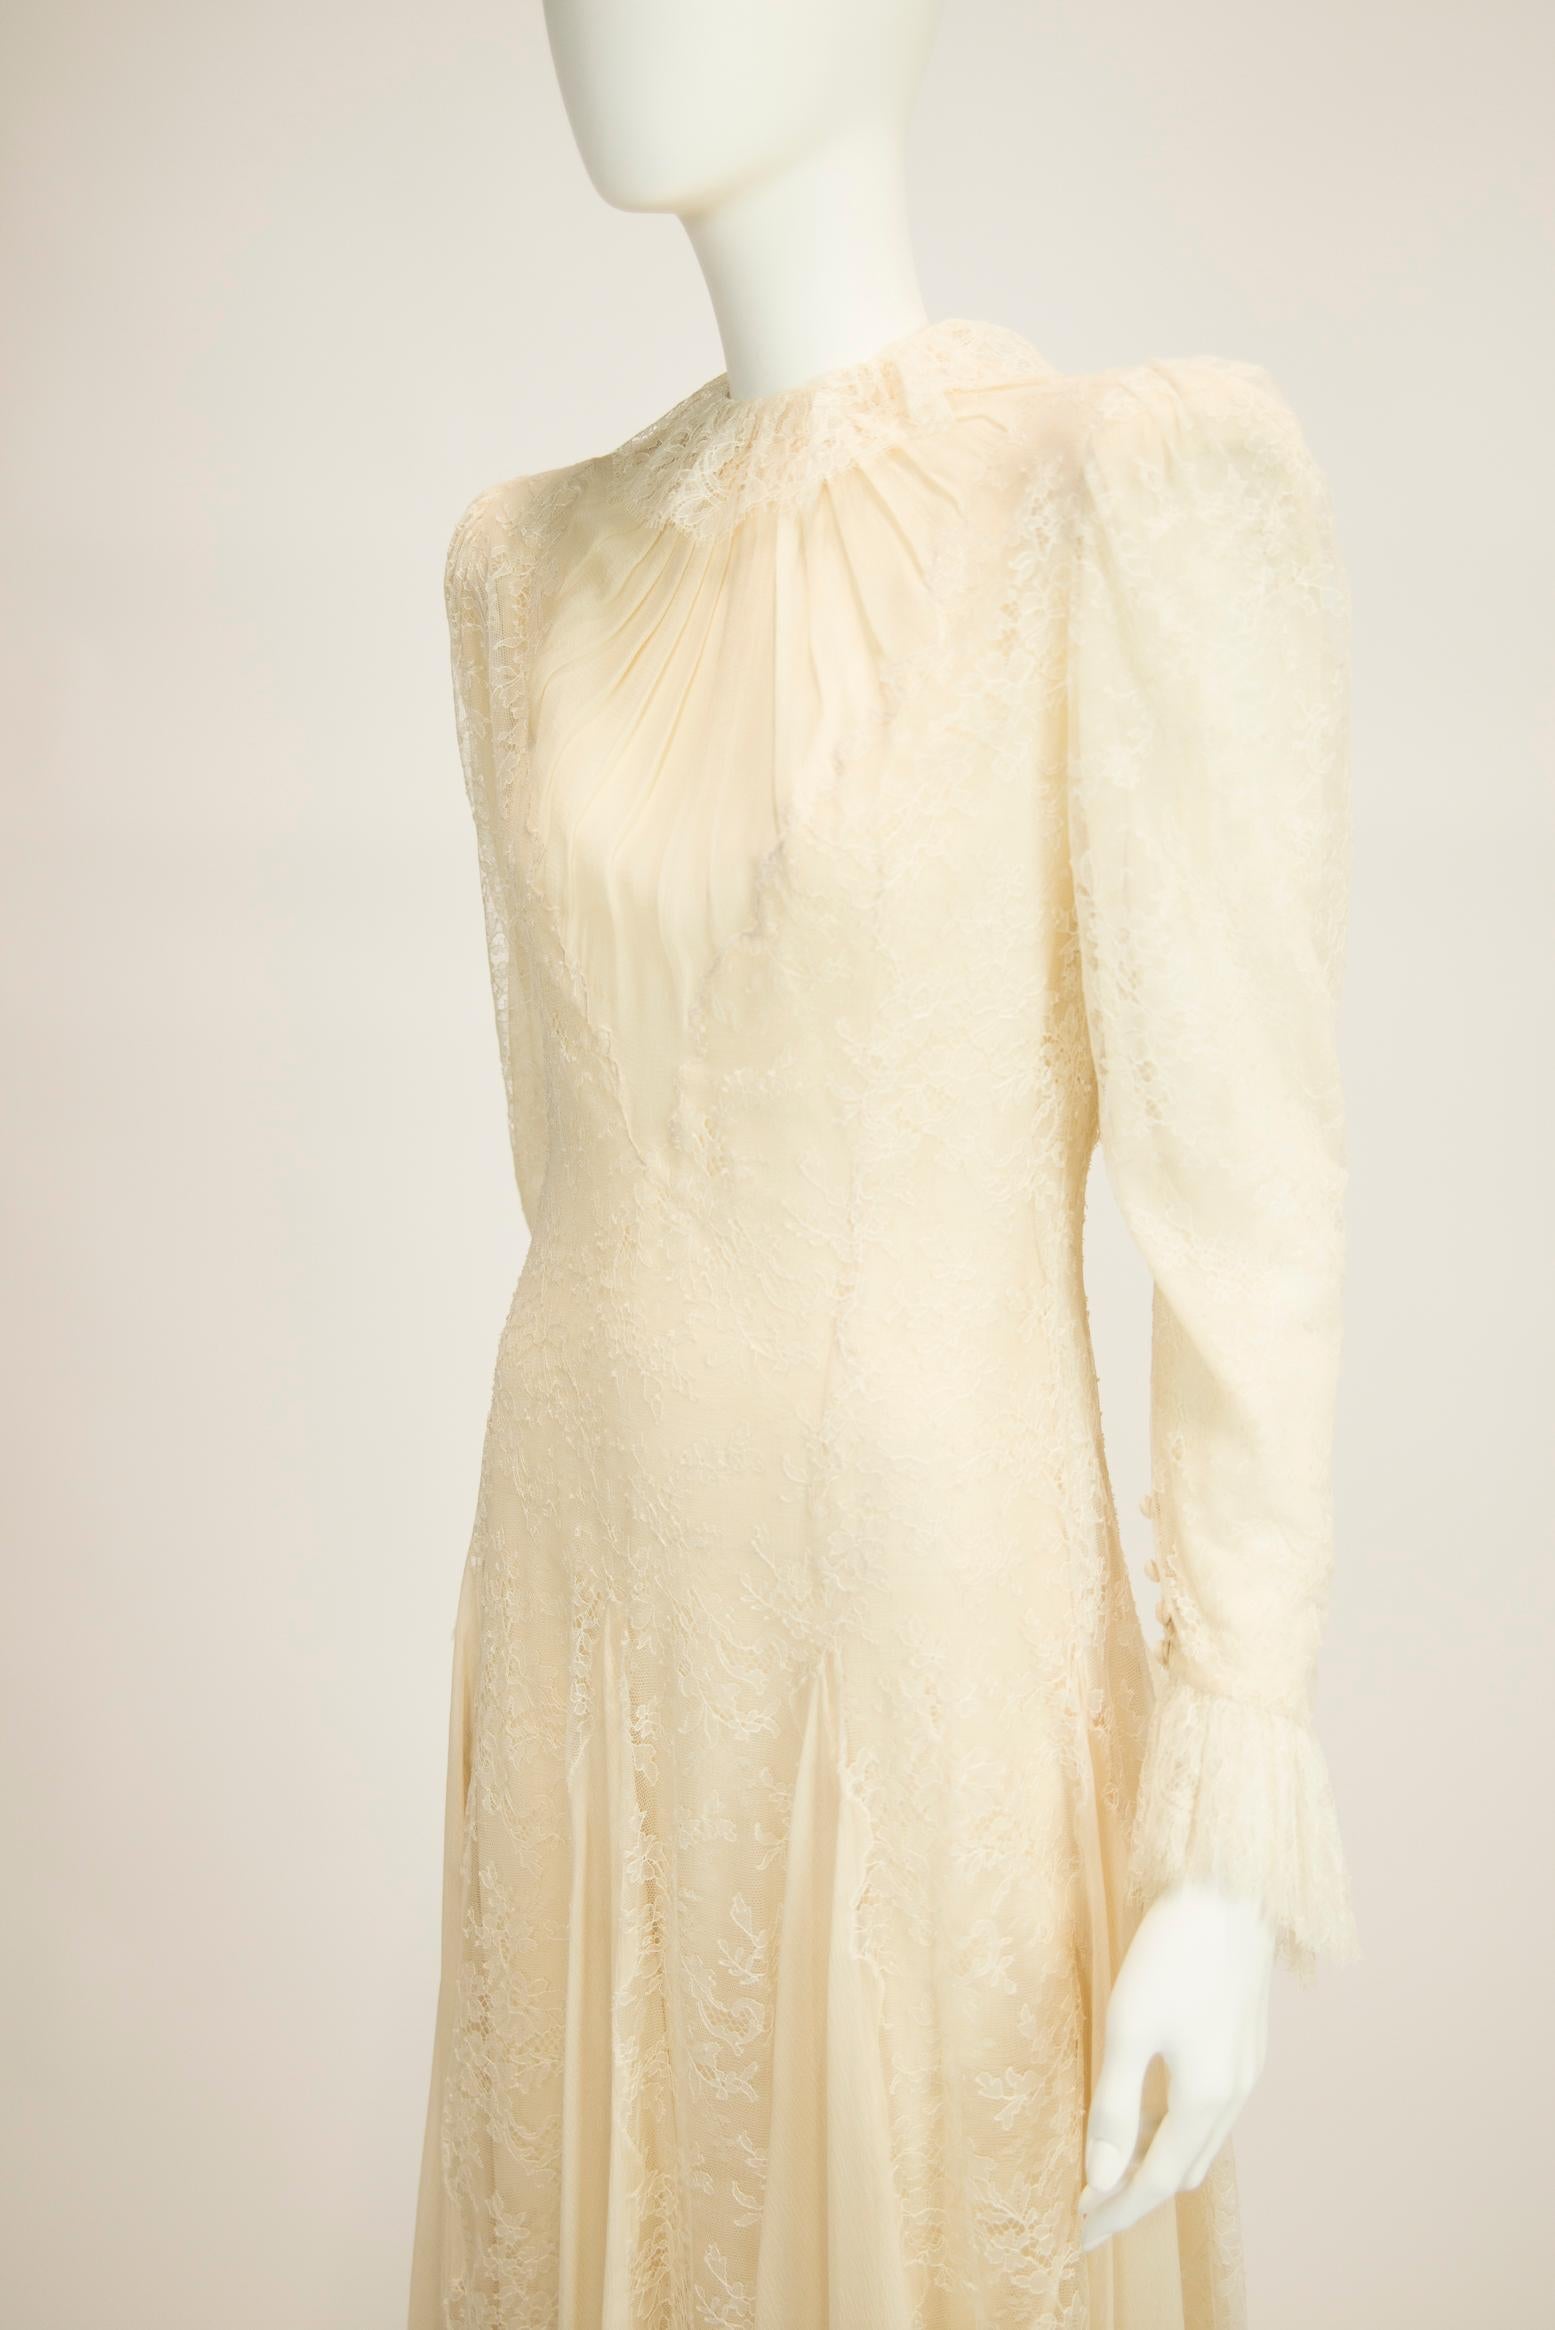 Exquisite Jean Louis Scherrer Couture Silk Chiffon & Lace-Trimmed Dress For Sale 2